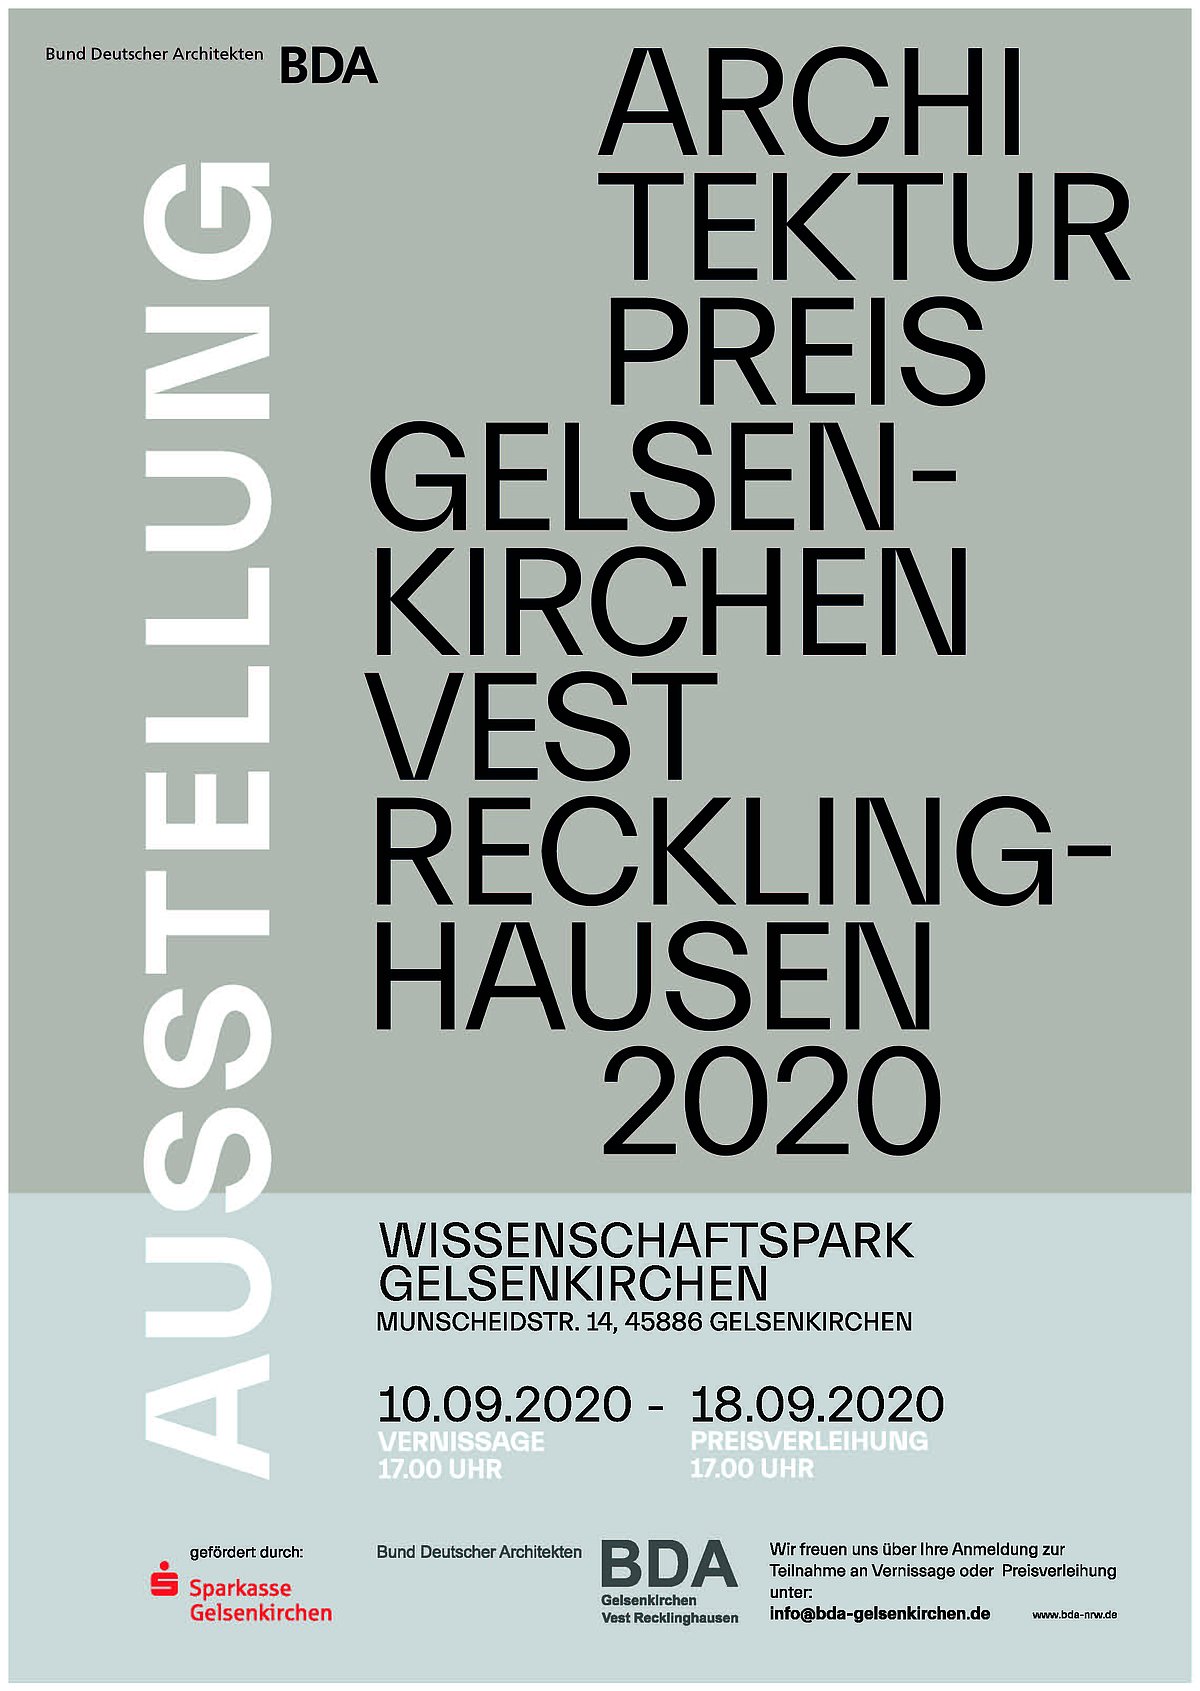 Plakat: Architekturpreis Gelsenkirchen Vest Recklinghausen 2020